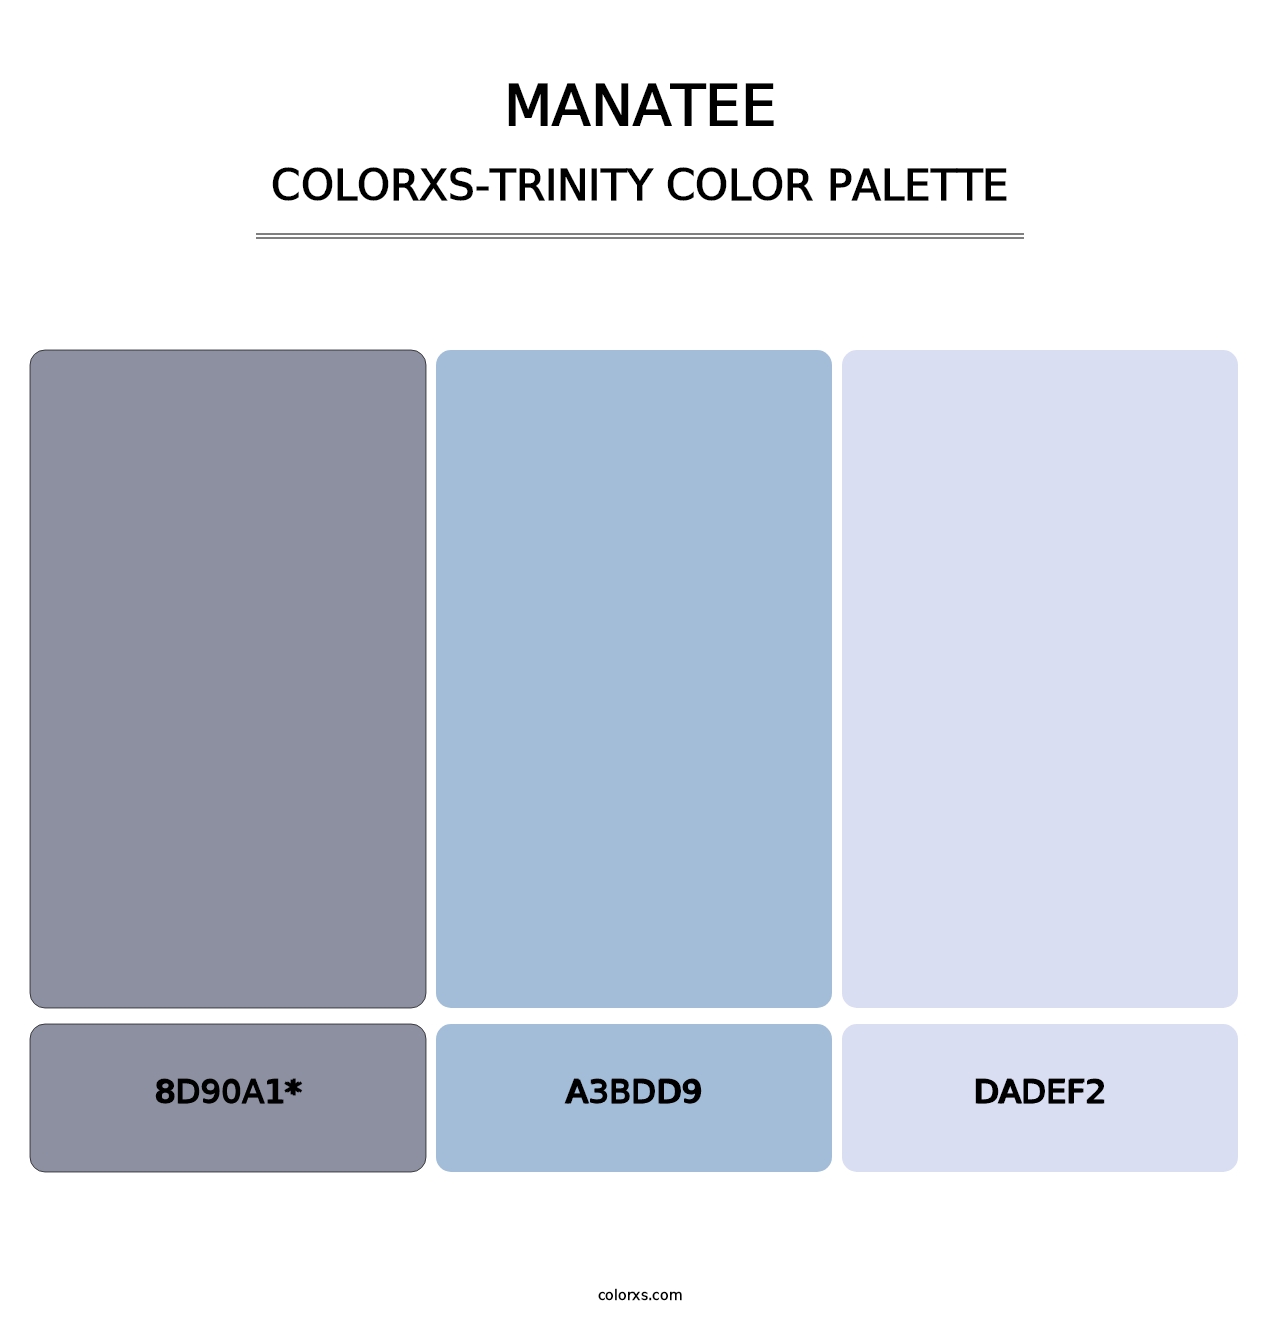 Manatee - Colorxs Trinity Palette